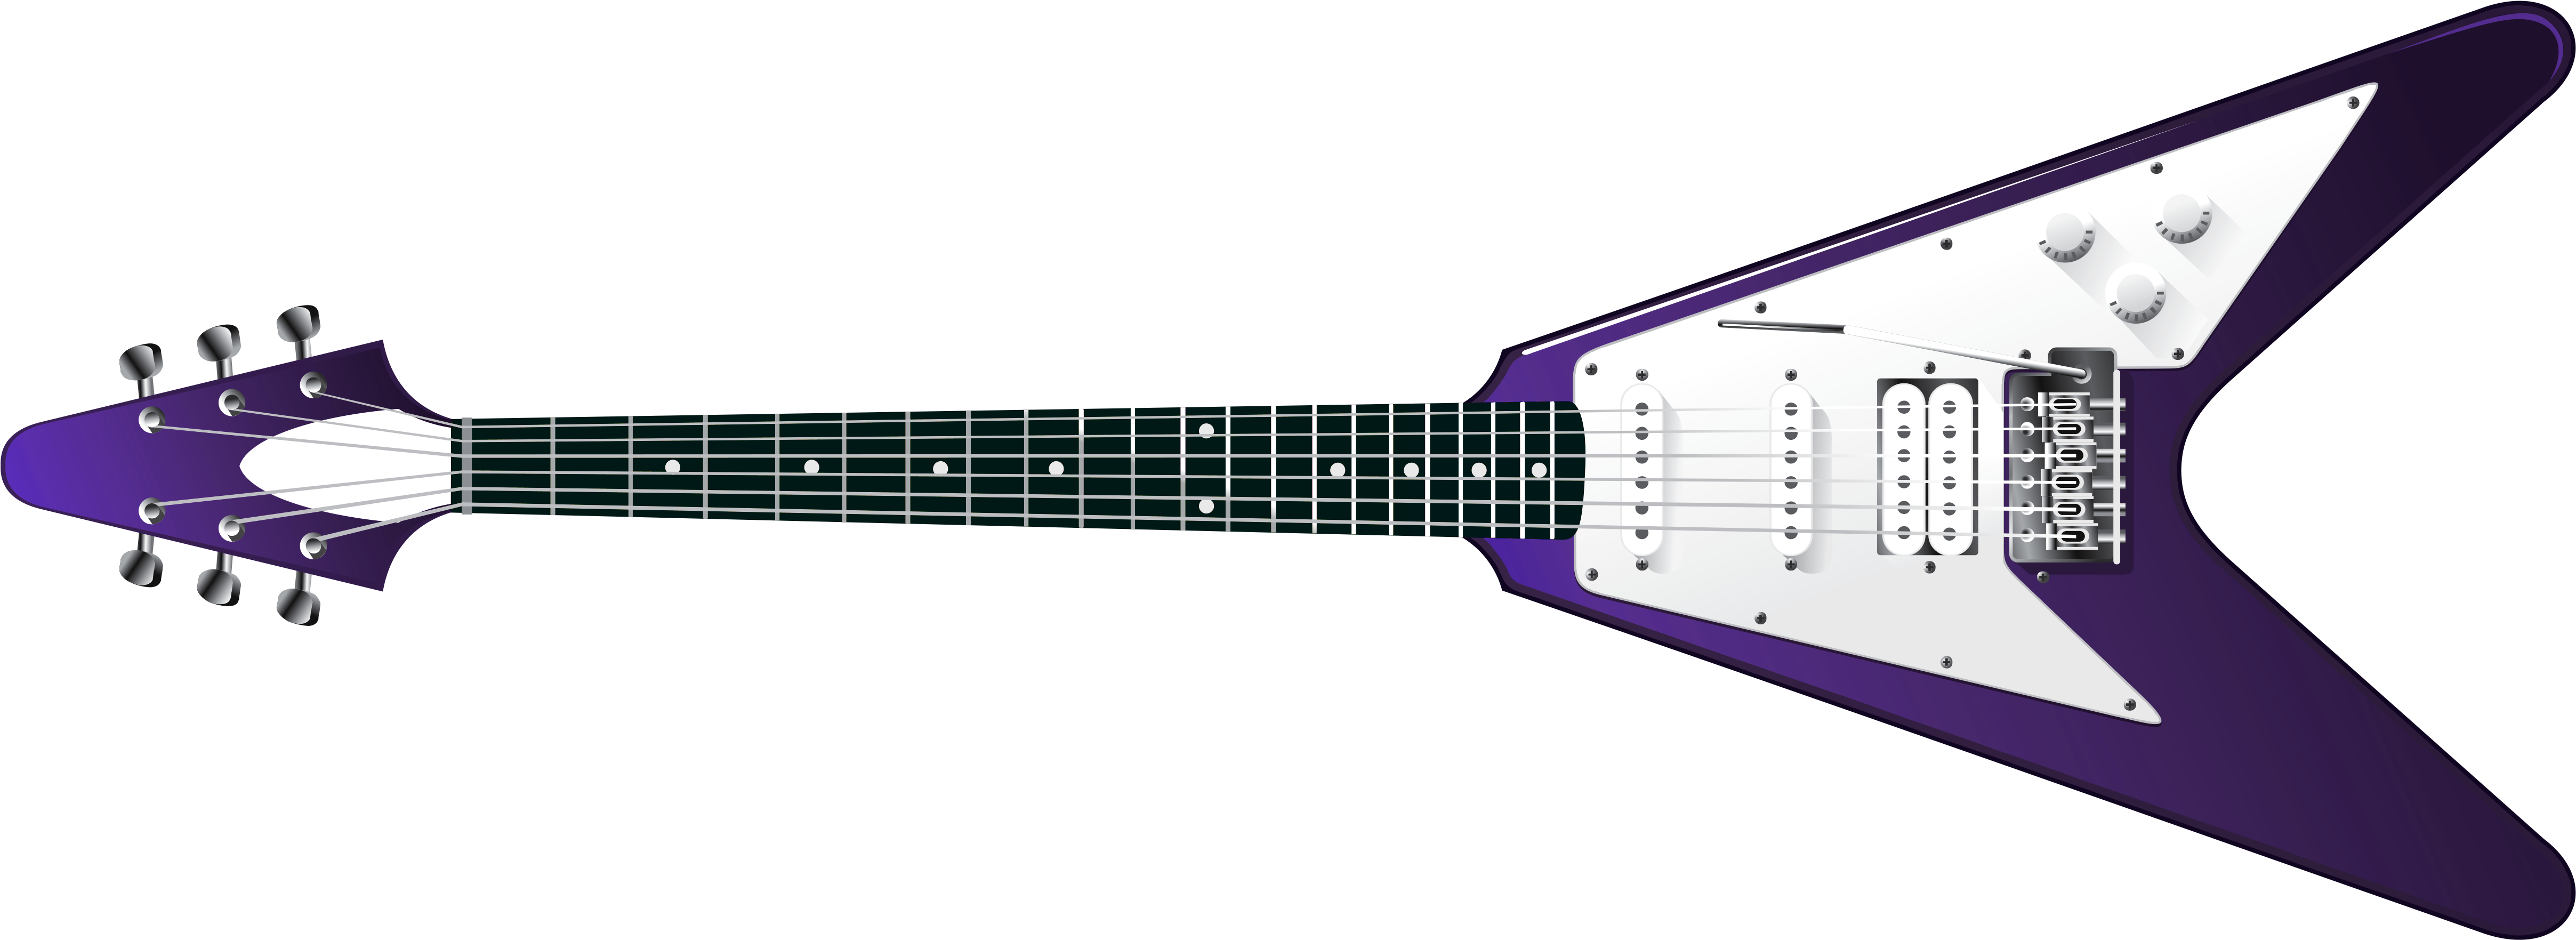 Purple Guitar Electric Free HD Image PNG Image